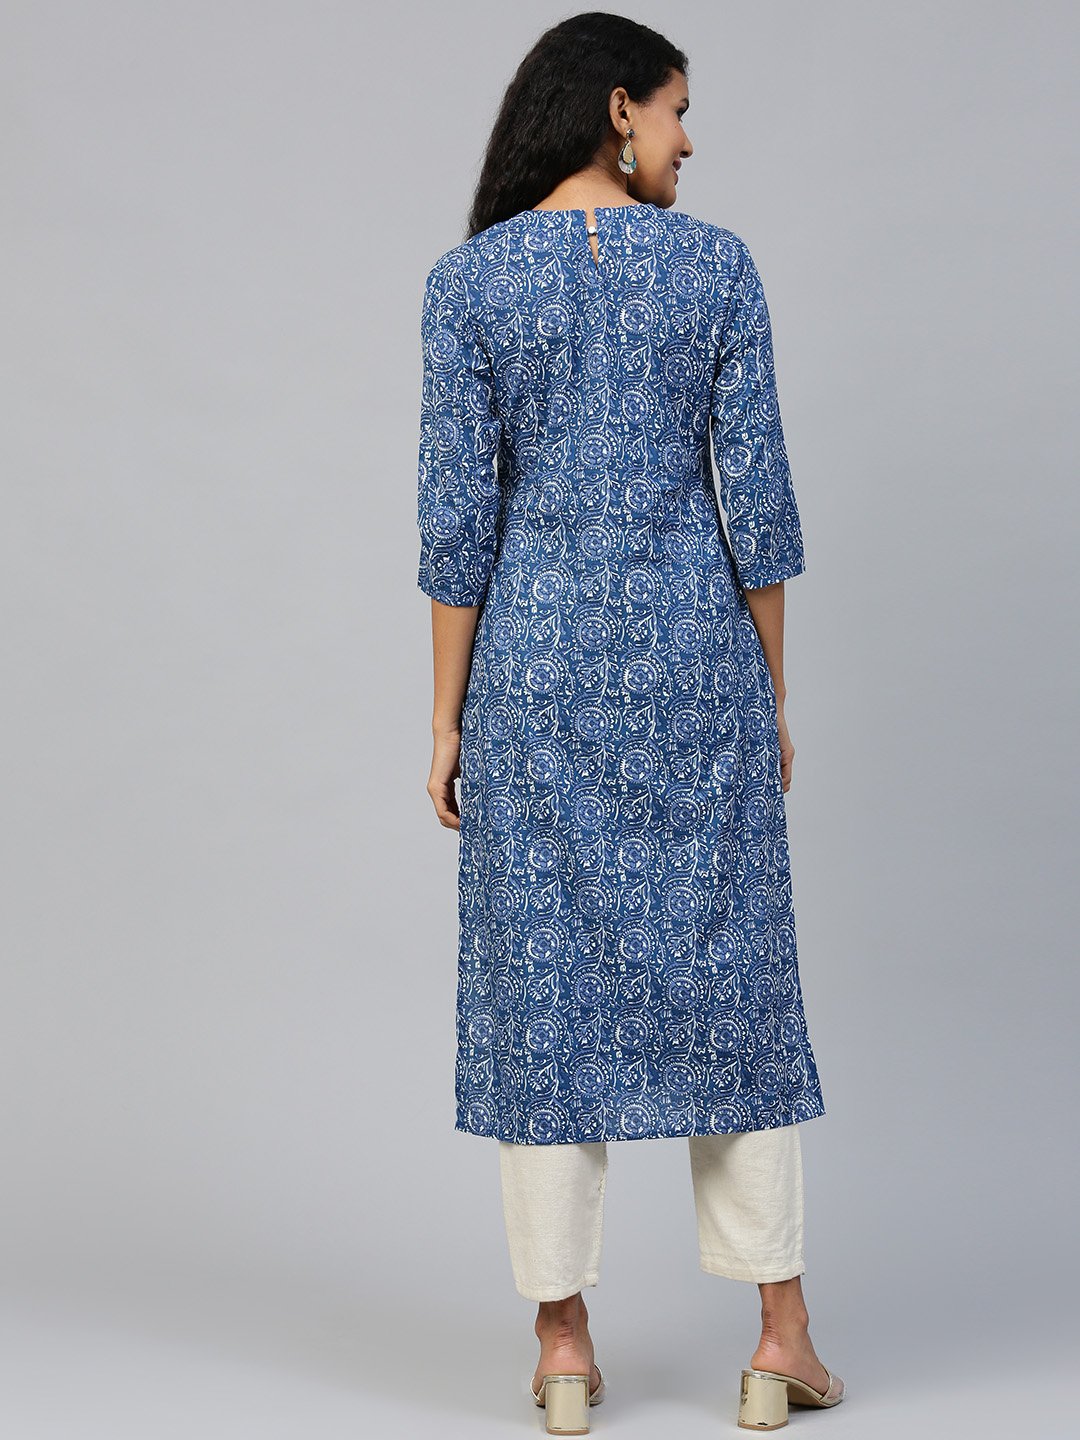 Women's Blue Floral Printed Mandarin Collar Cotton A-Line Dress - Nayo Clothing